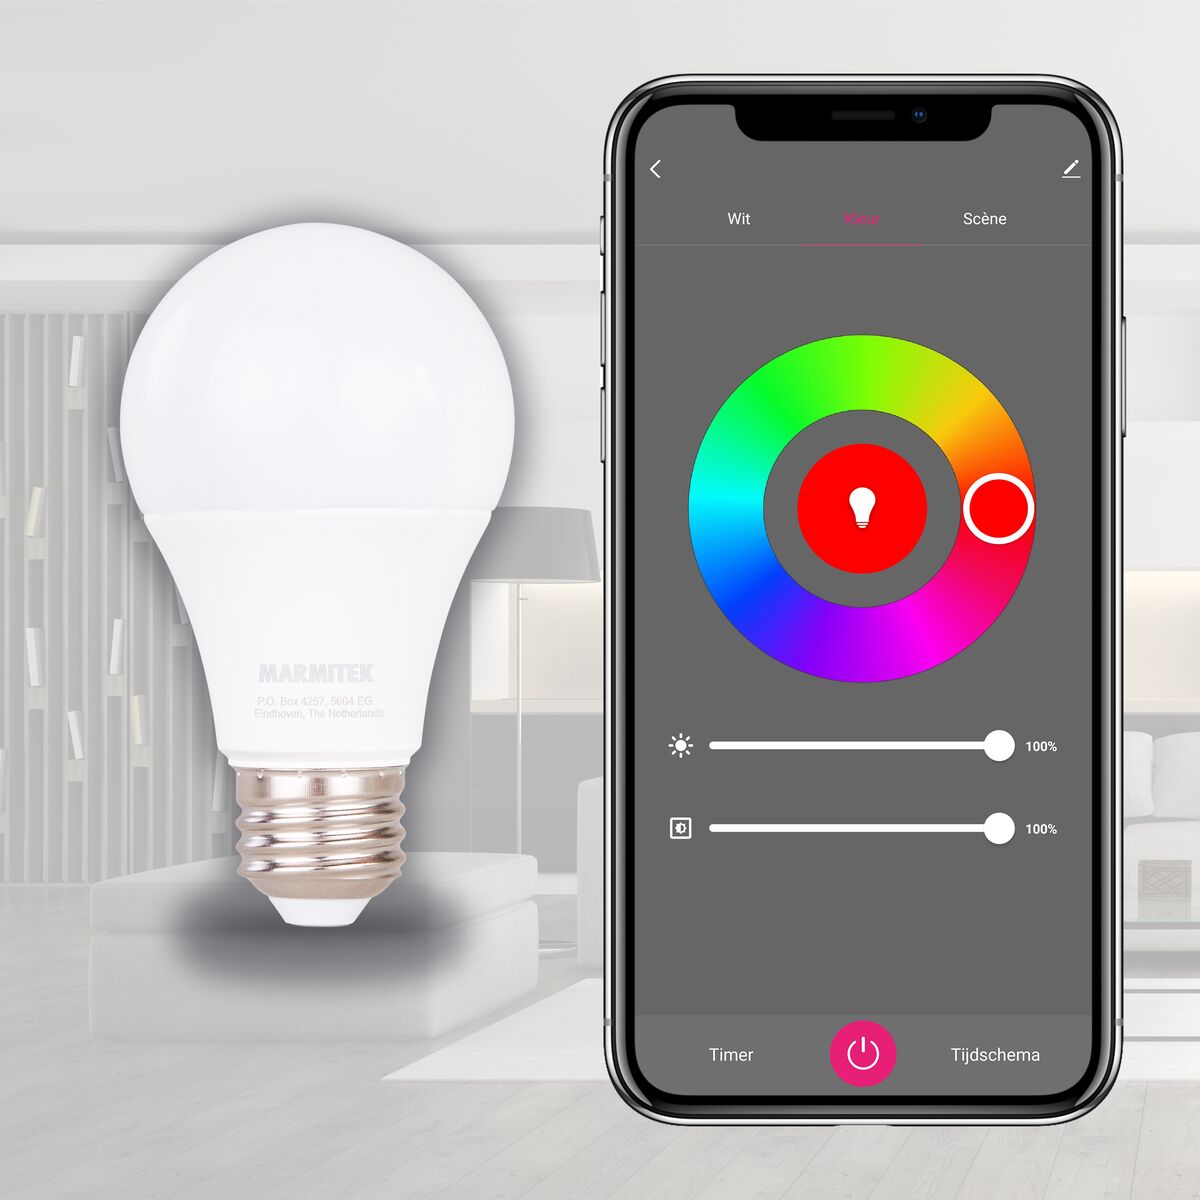 Glow MO - Smart Lampe - E27 - Steuerung per App - Farbe